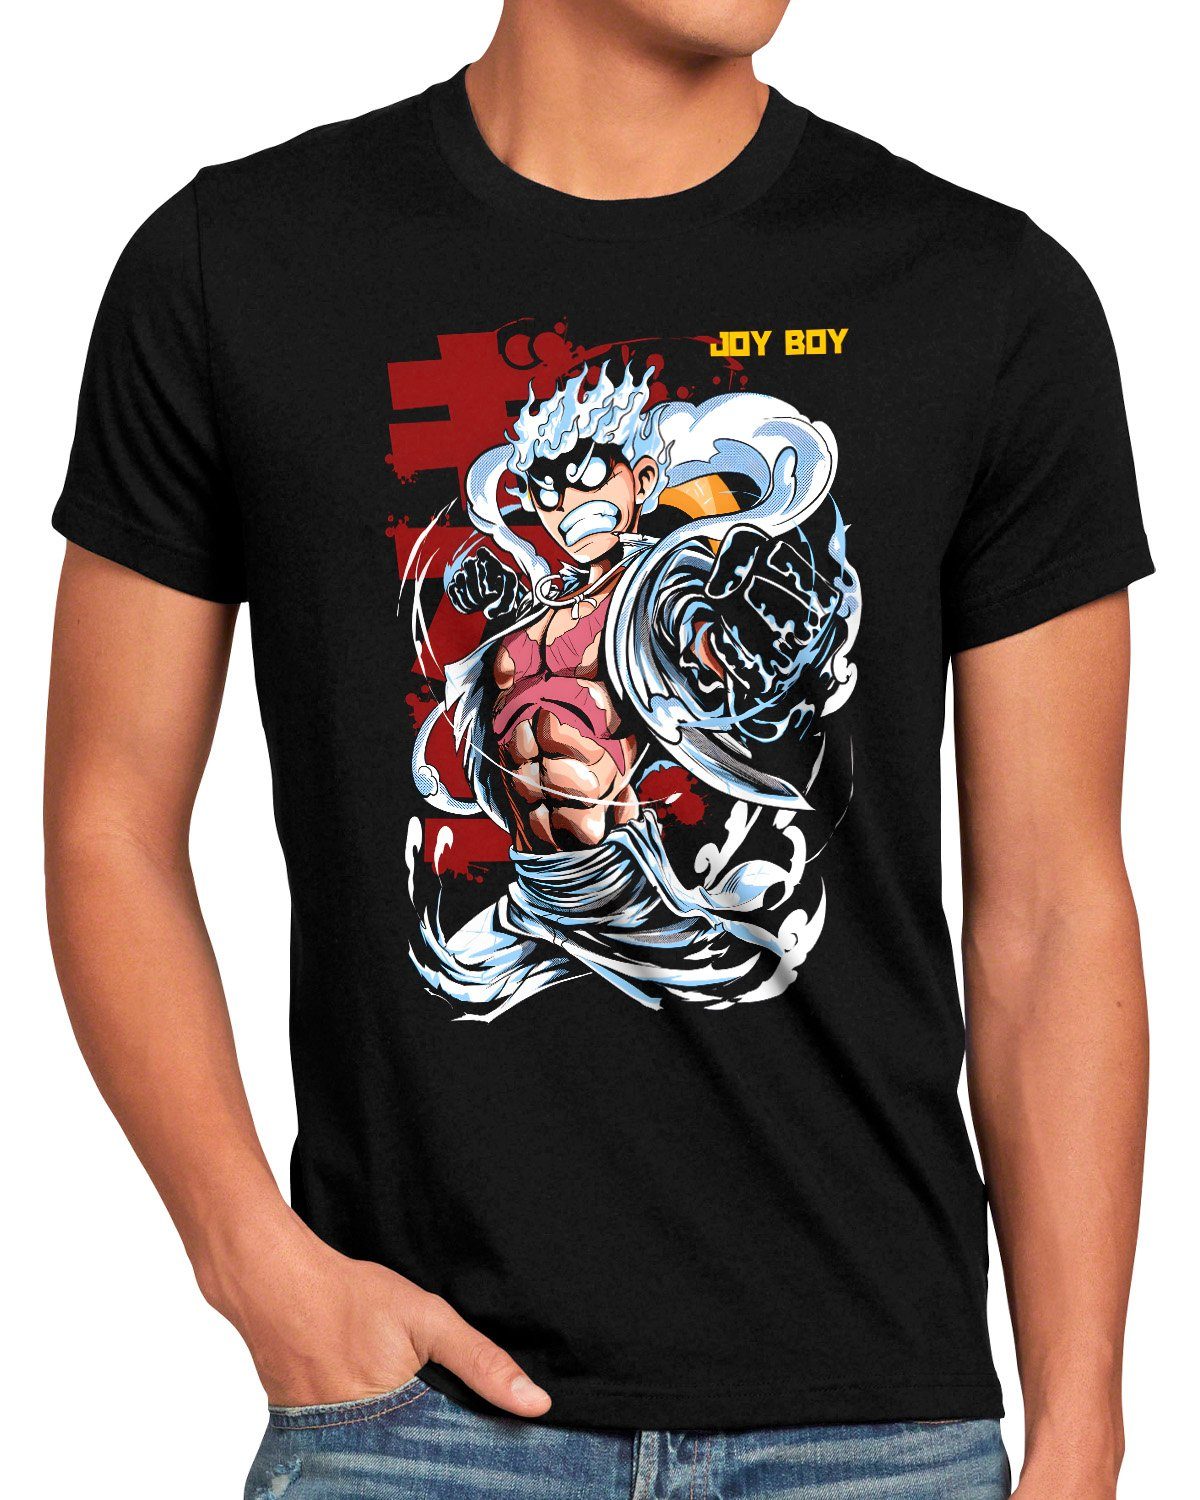 Print-Shirt Boy piece Herren anime Joy Over style3 luffy japan one T-Shirt manga